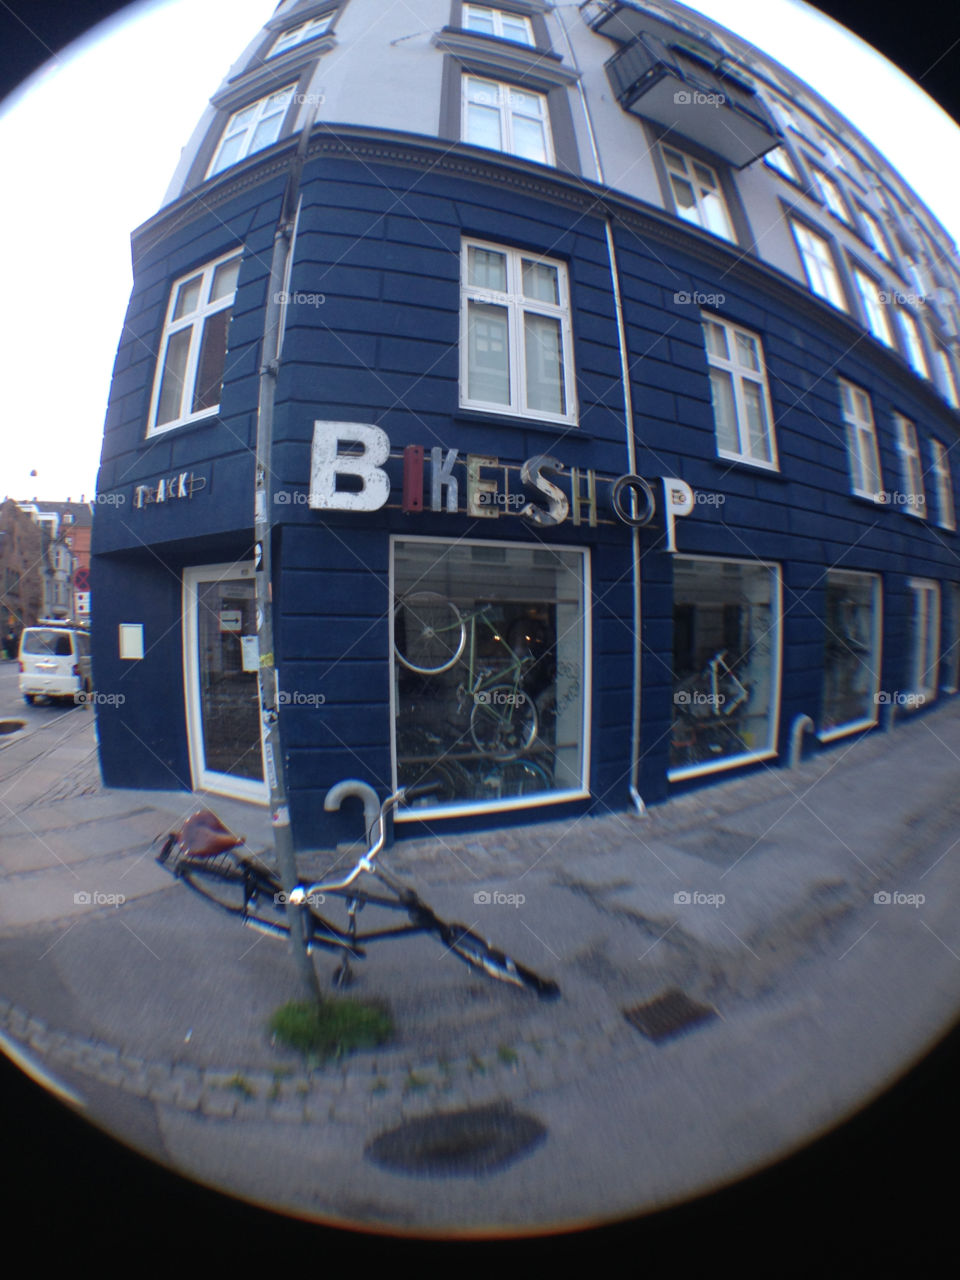 Bike shop in Copenhagen 